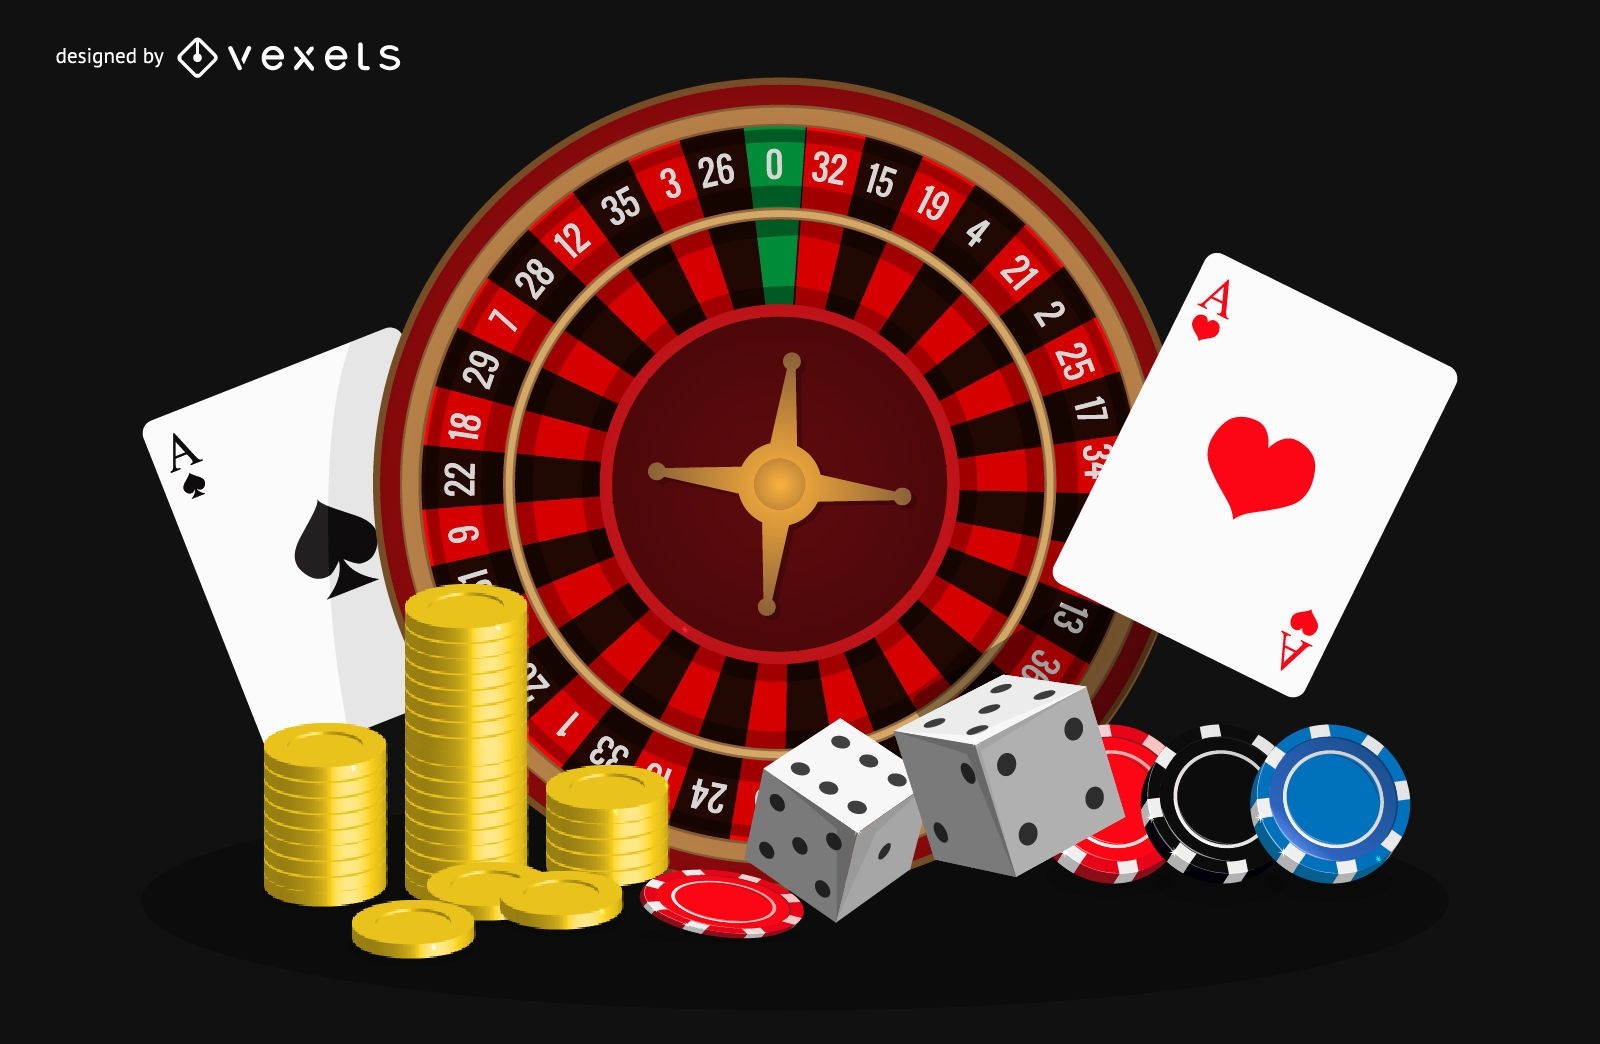 fortune casino online